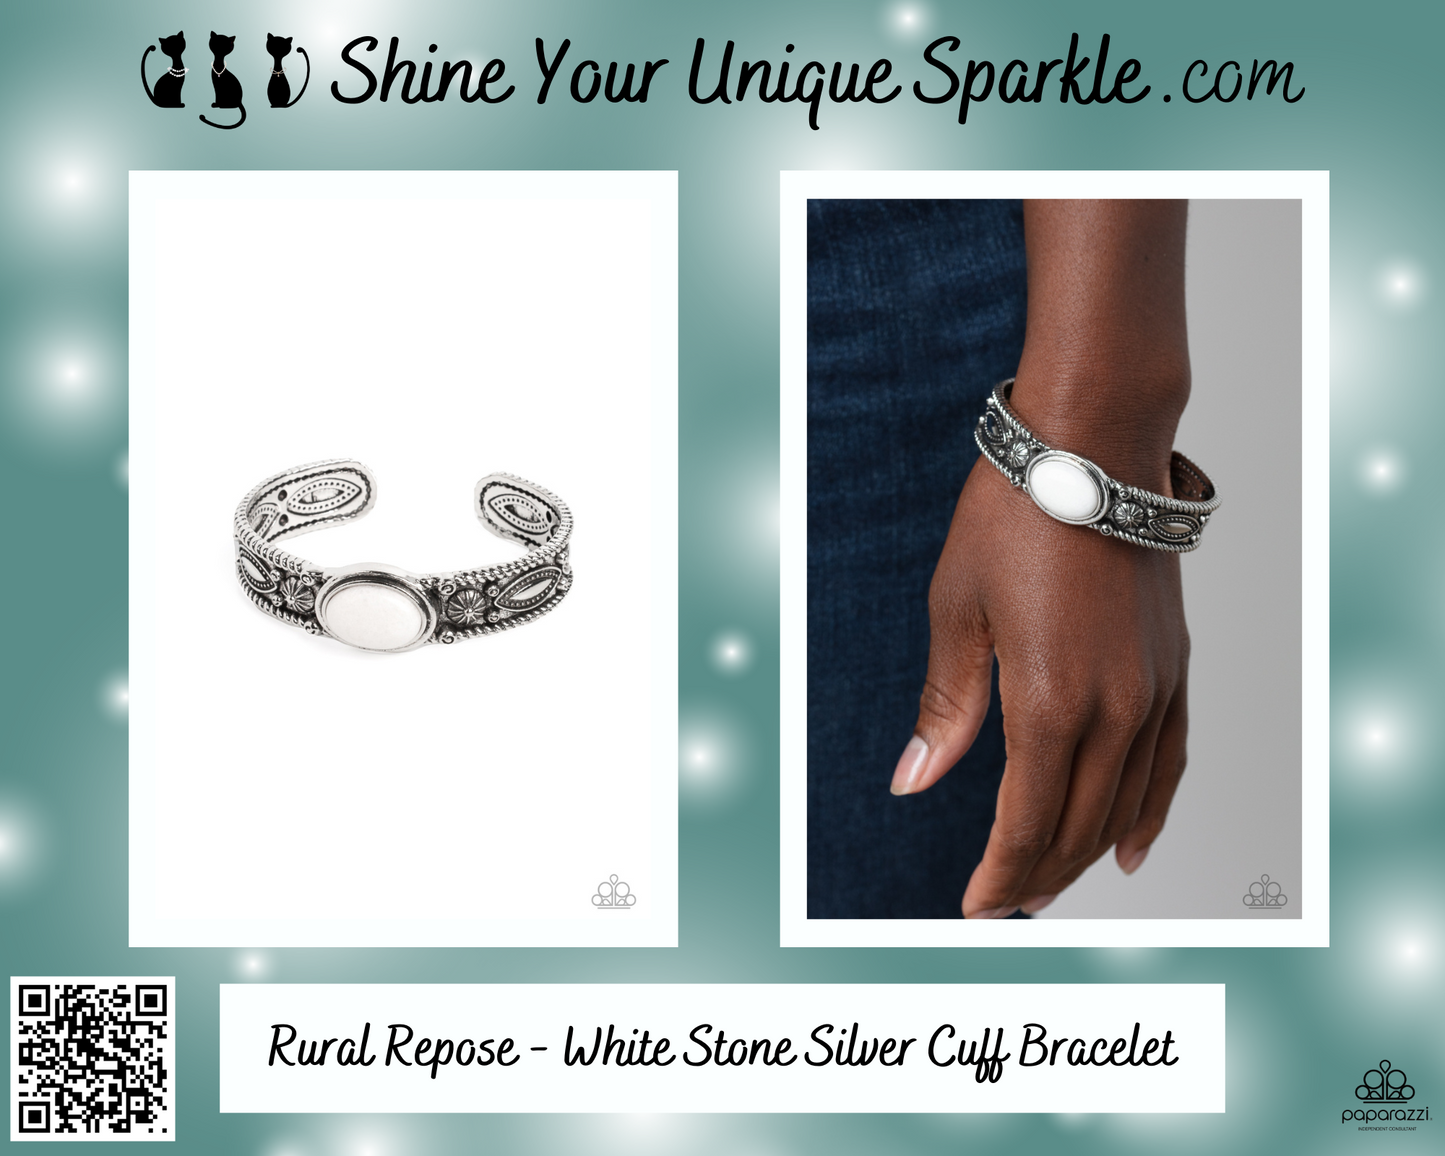 Rural Repose - White Stone Silver Cuff Bracelet